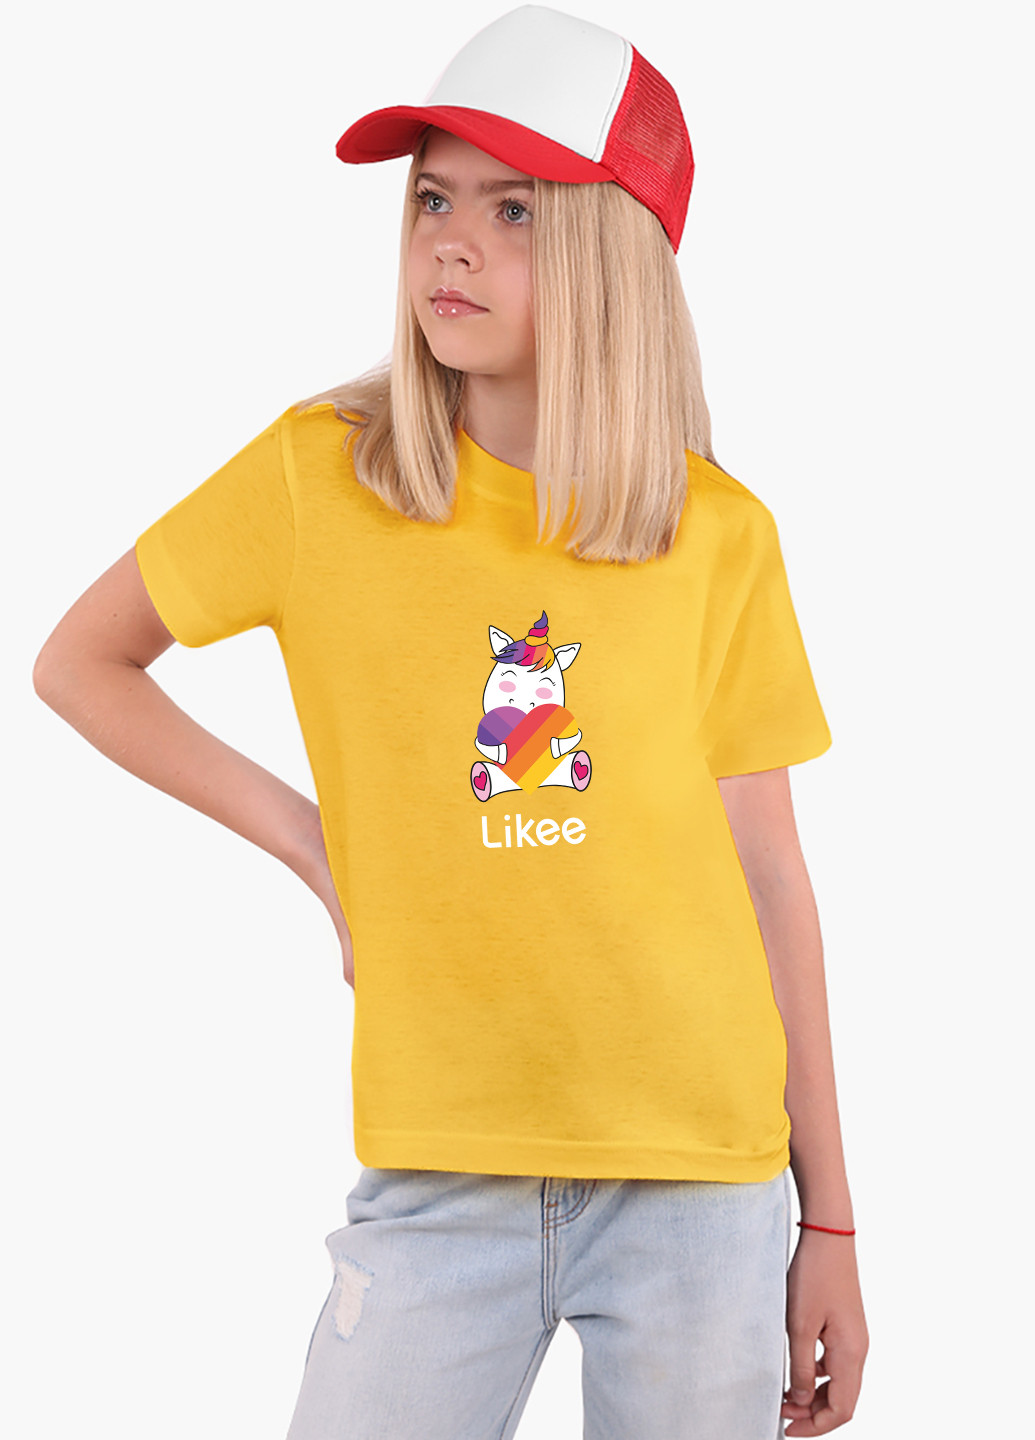 Жовта демісезонна футболка дитяча лайк єдиноріг (likee unicorn) (9224-1037) MobiPrint